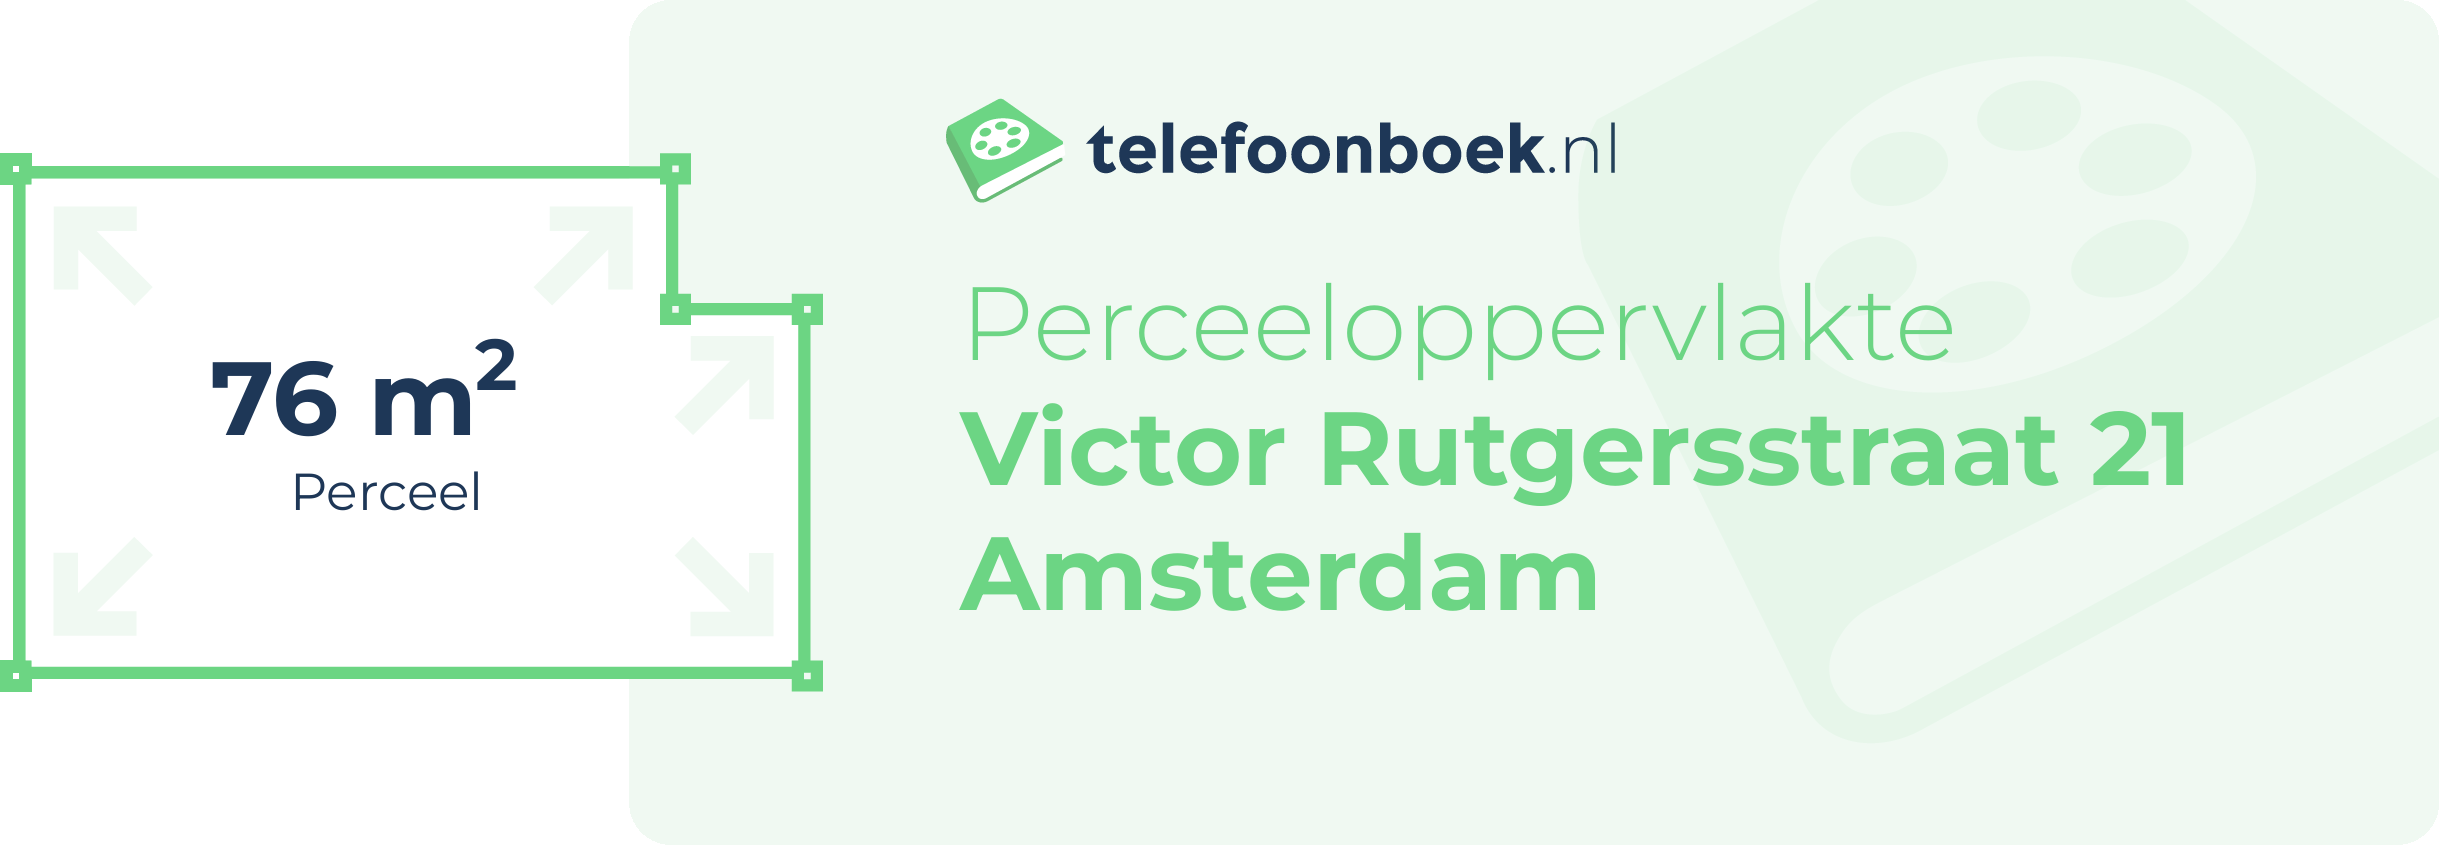 Perceeloppervlakte Victor Rutgersstraat 21 Amsterdam